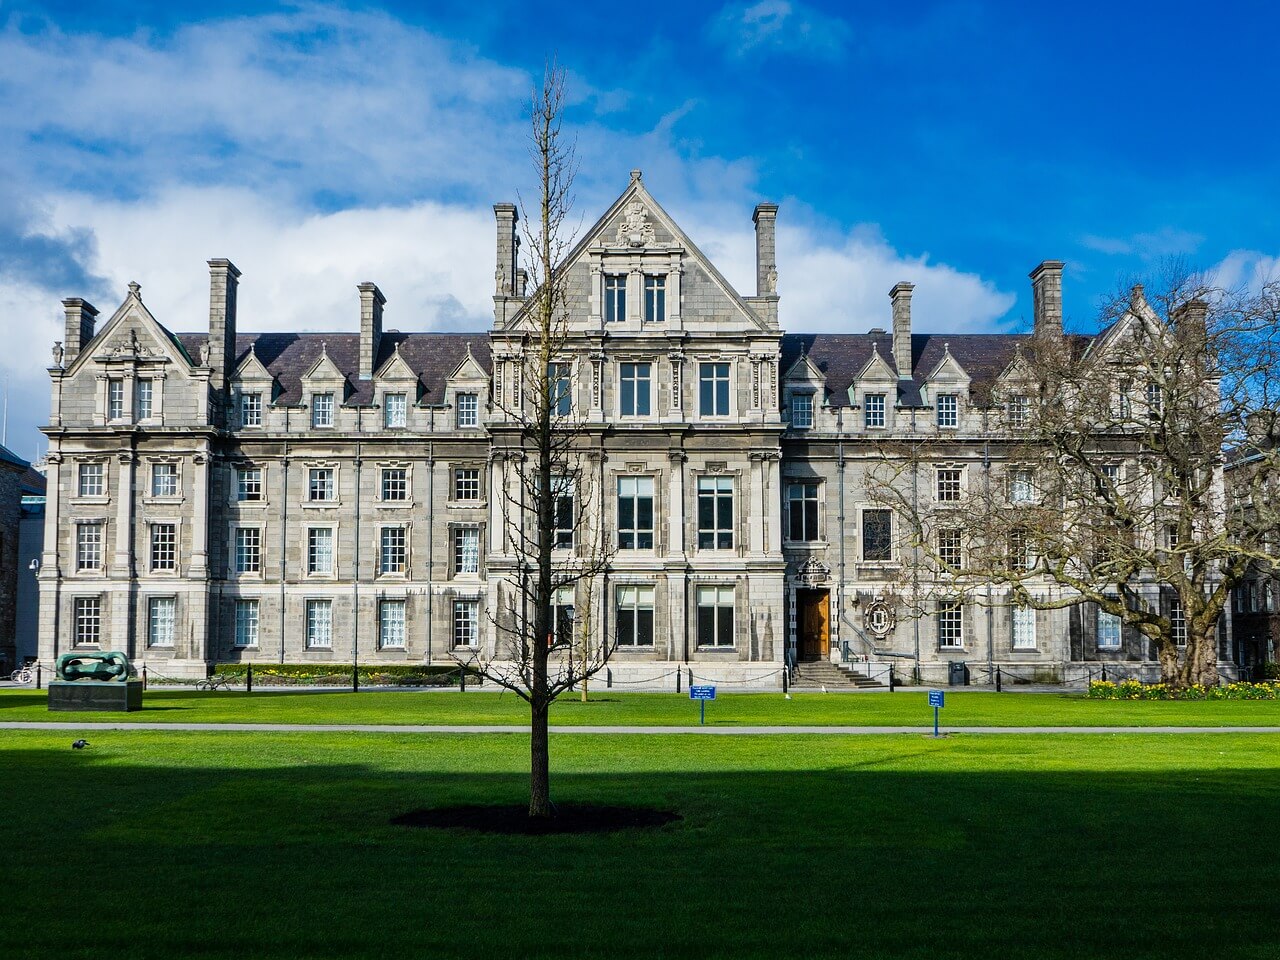 Cheapest Universities in Ireland